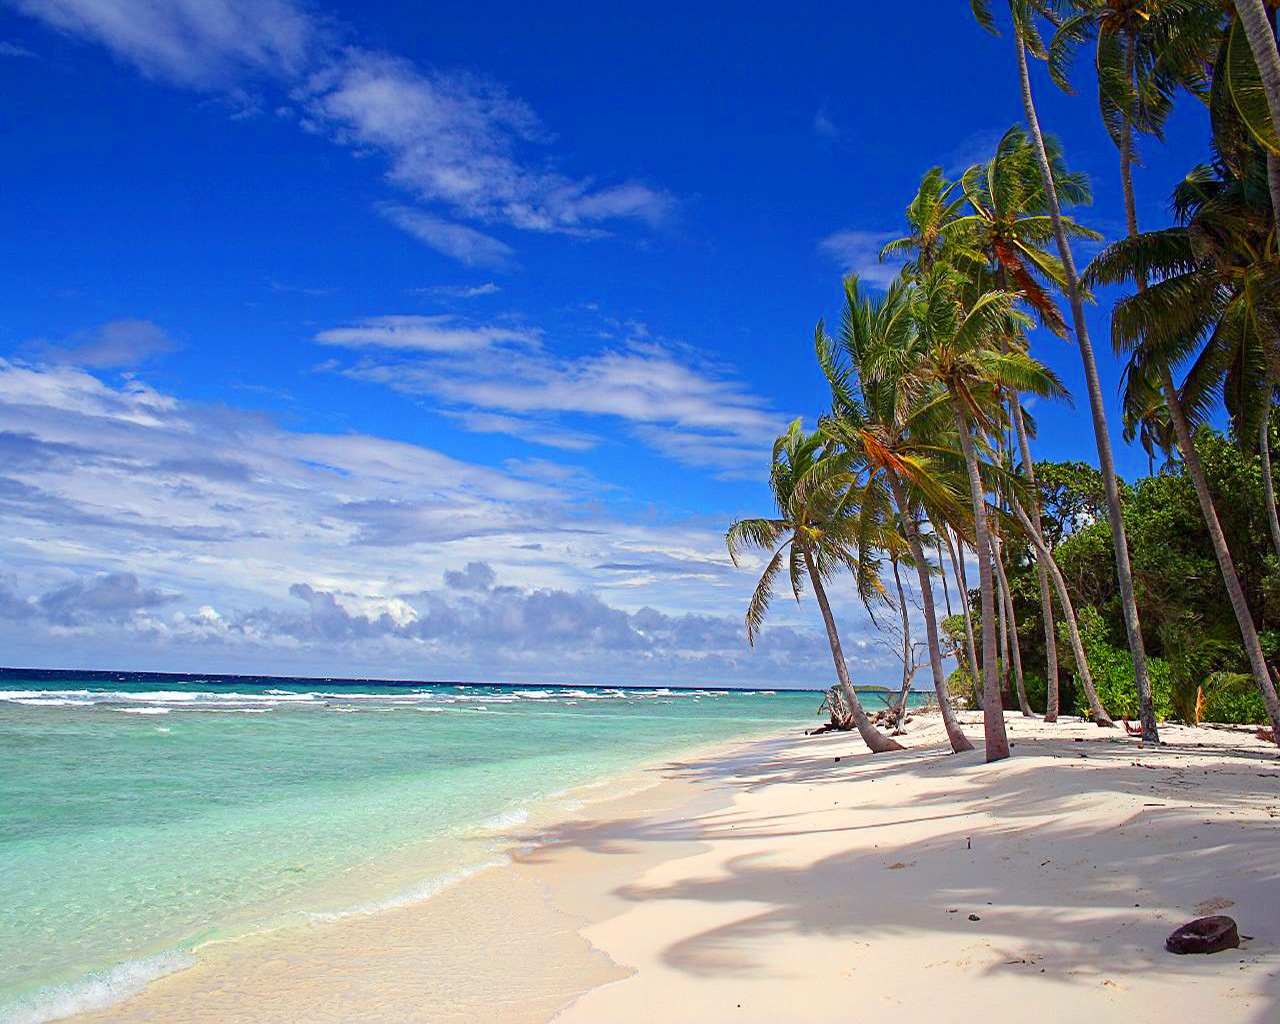 https://blogger.googleusercontent.com/img/b/R29vZ2xl/AVvXsEiseeIrKipAwM_minsTNGn2gh7ySQ6JW9HliGJeWGSUH9RJUJAmM77SpMywOMvk3P7Mpo9gNvuS8Jh6UehILaluOnKyggHKUlNwnfM4gvKmgTQTVWtWeH28ztwrzbl5JKxJUl__bgHUs_g/s1600/Kiribati+beach.jpg